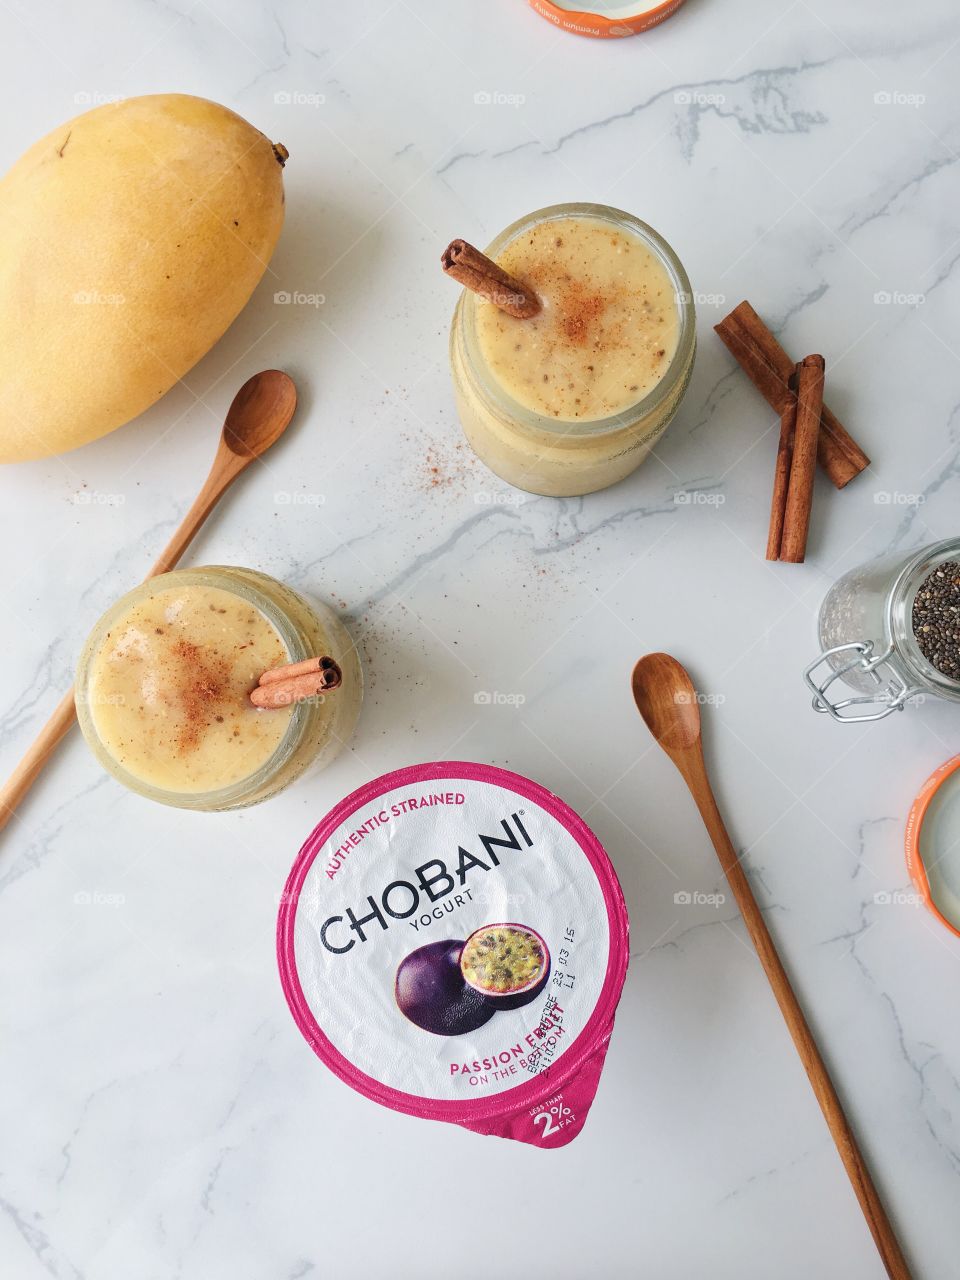 Made with Chobani : Healthy energy smoothie.
(CHOBANI Passion Fruit, mango, banana, chia seed, honey, cinnamon and milk)